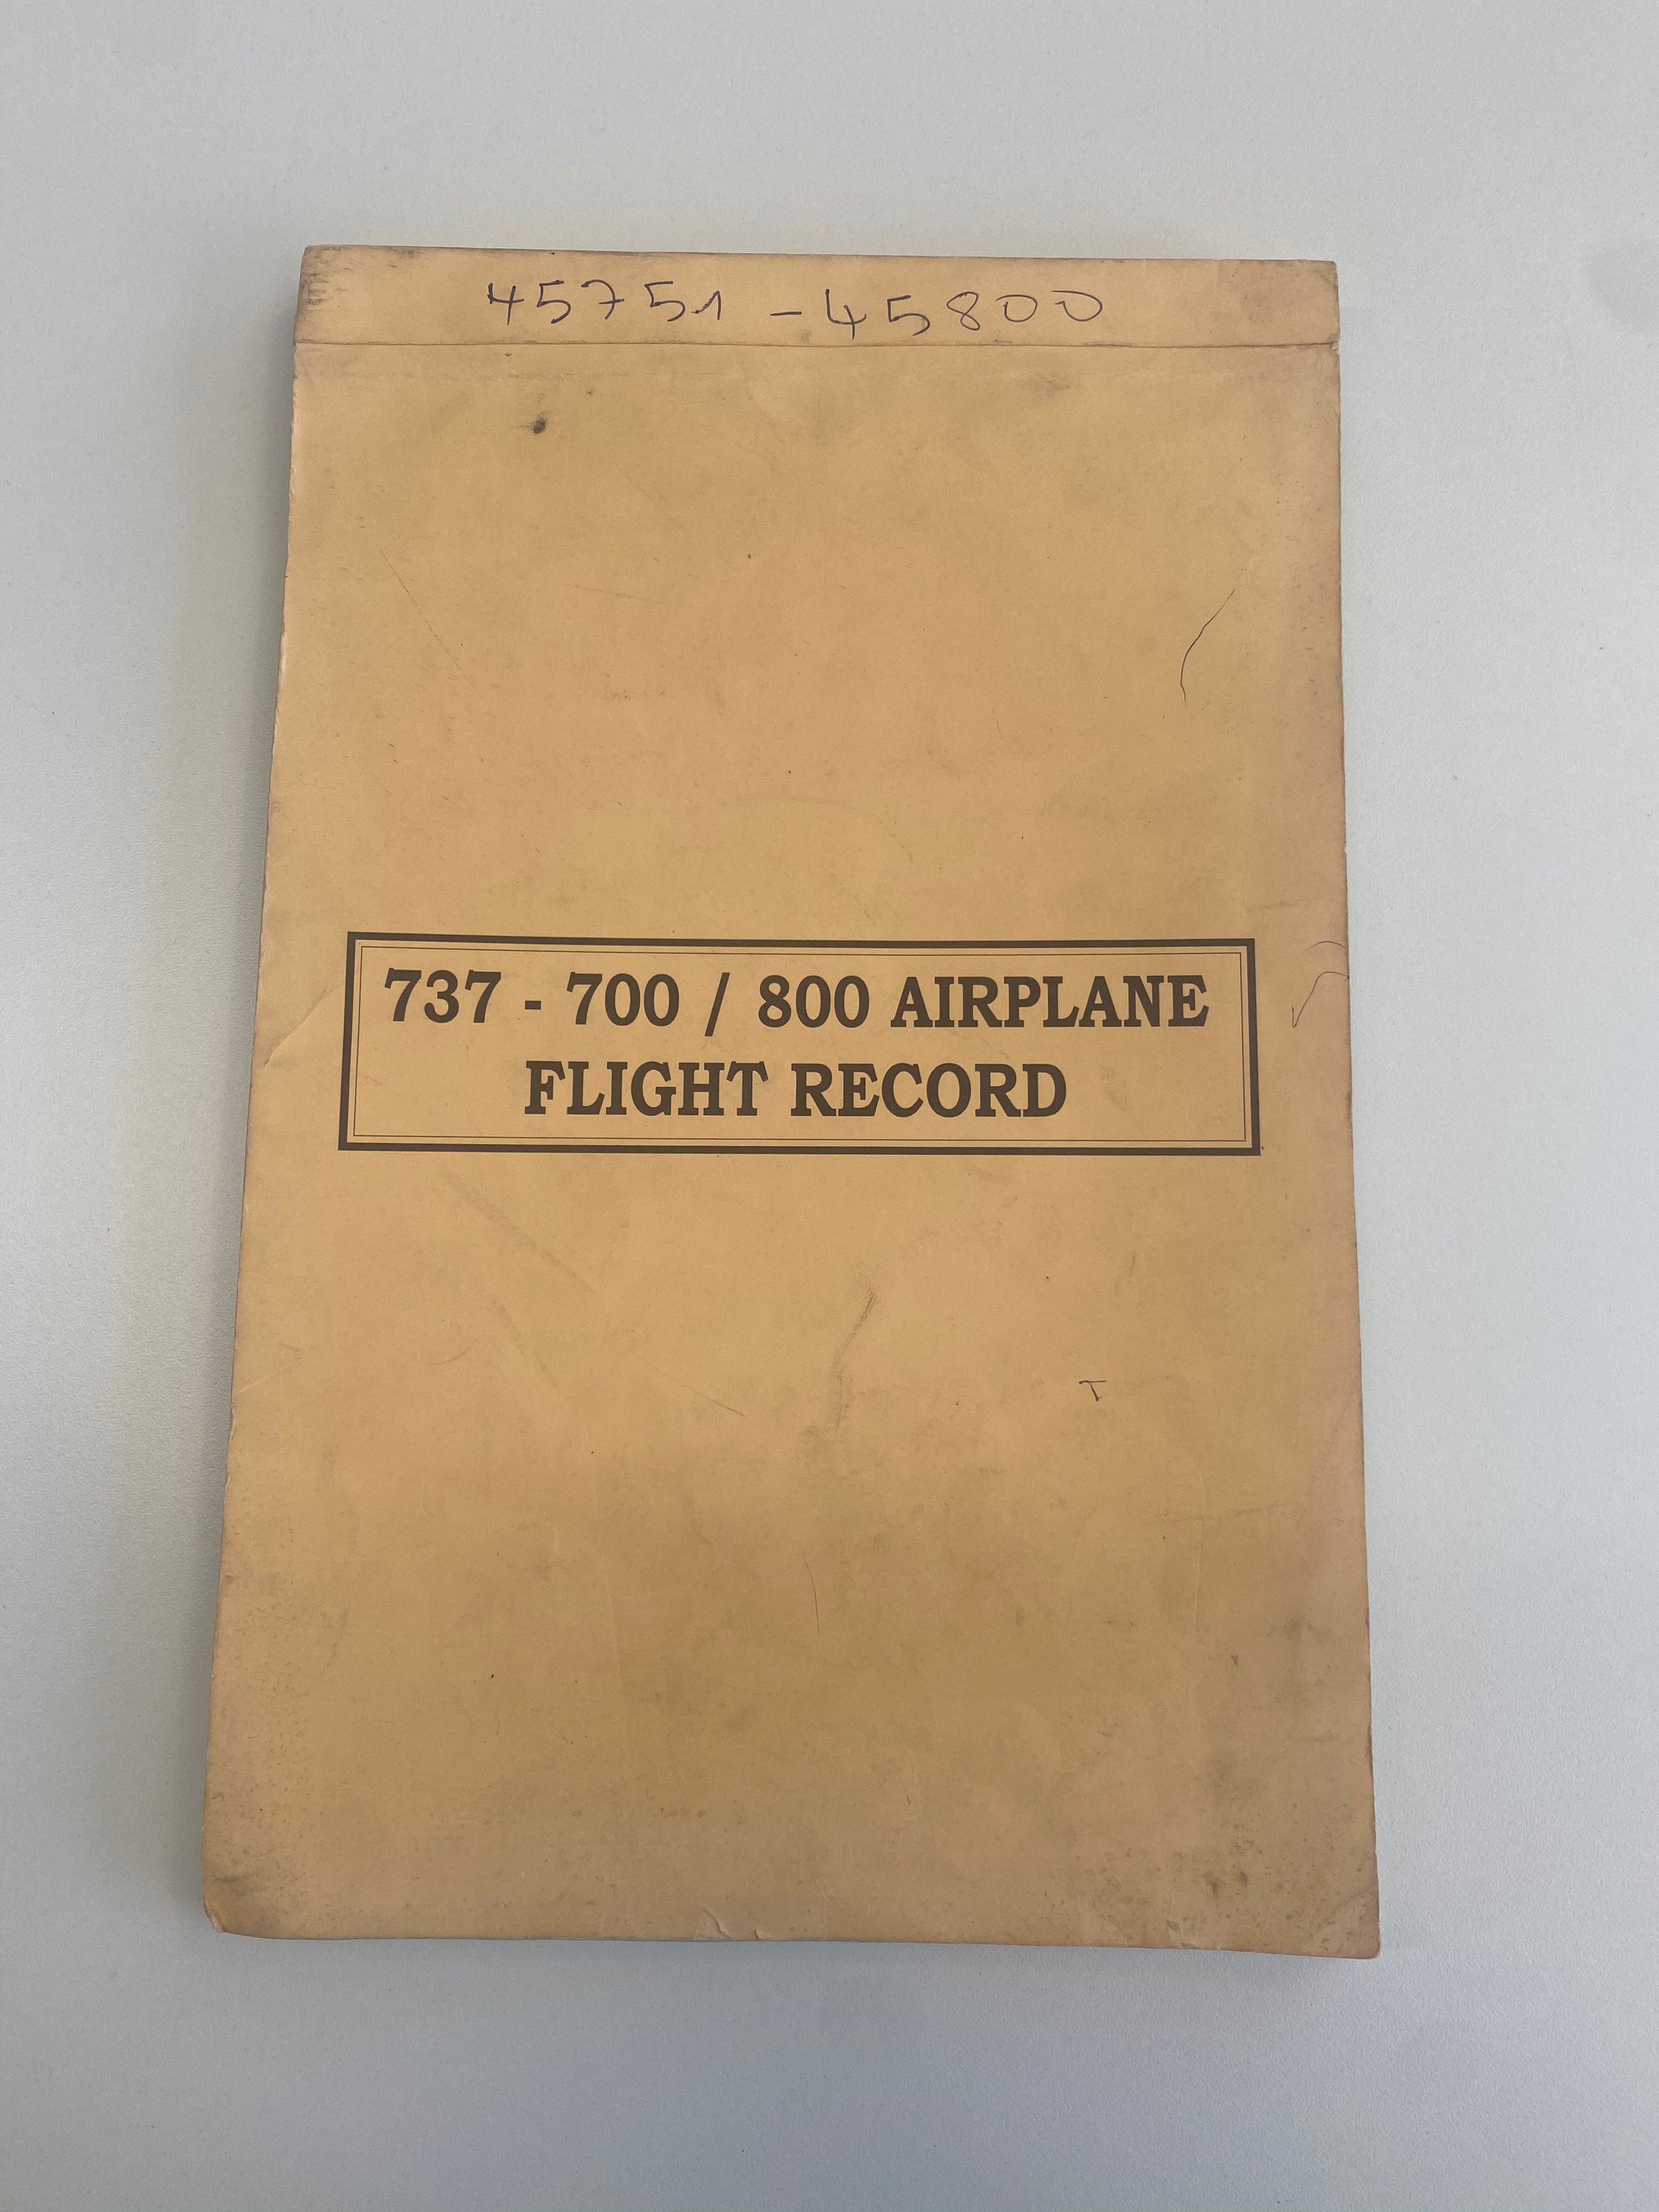 737-700/800 Airplane flight record